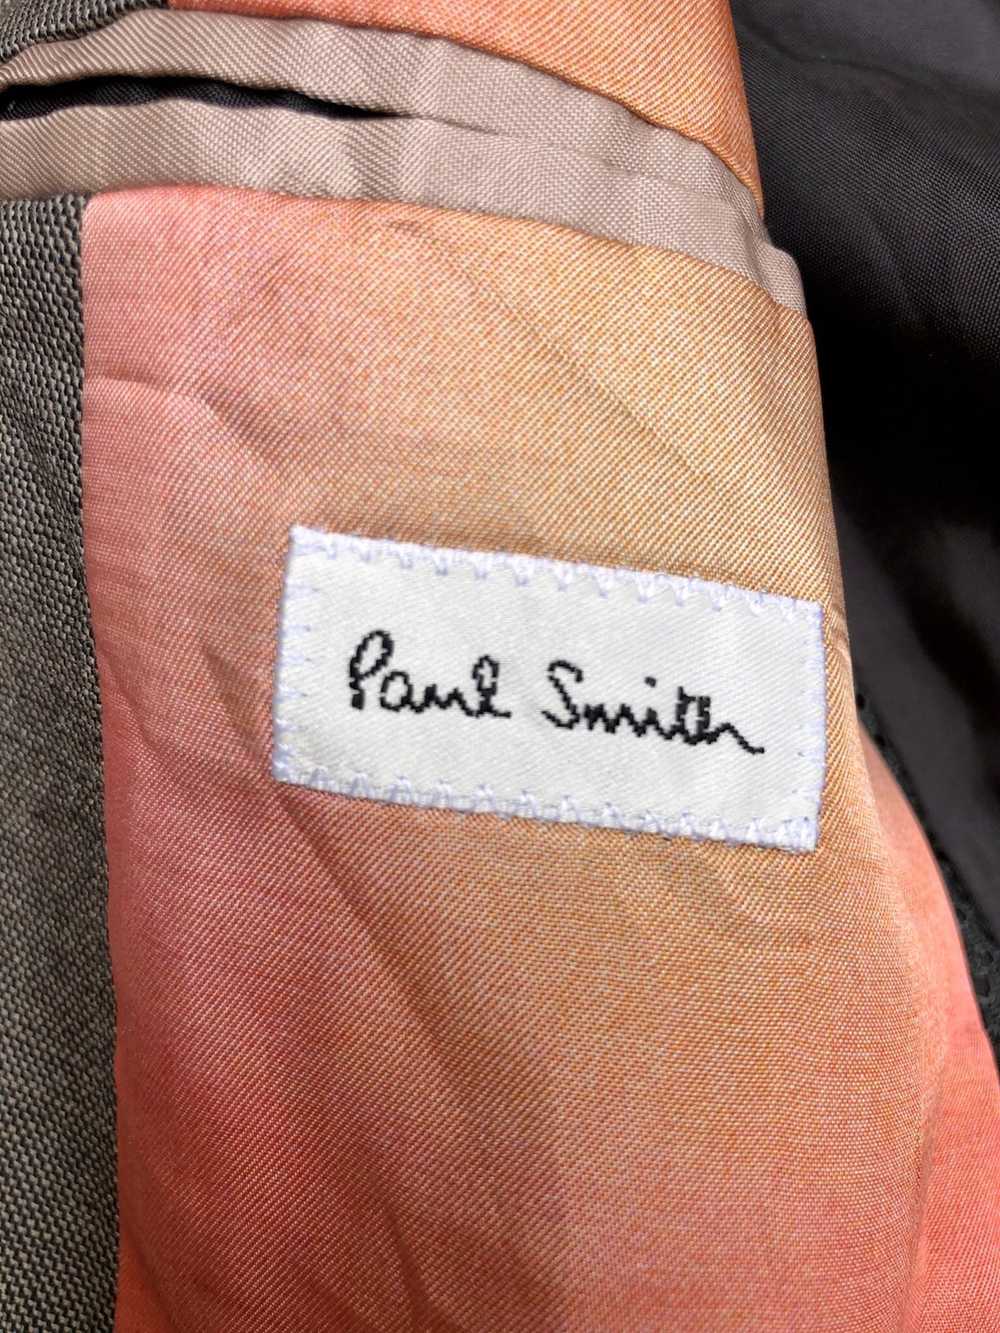 Paul Smith Paul Smith Two Tone Sleeve Blazer Coat - image 9